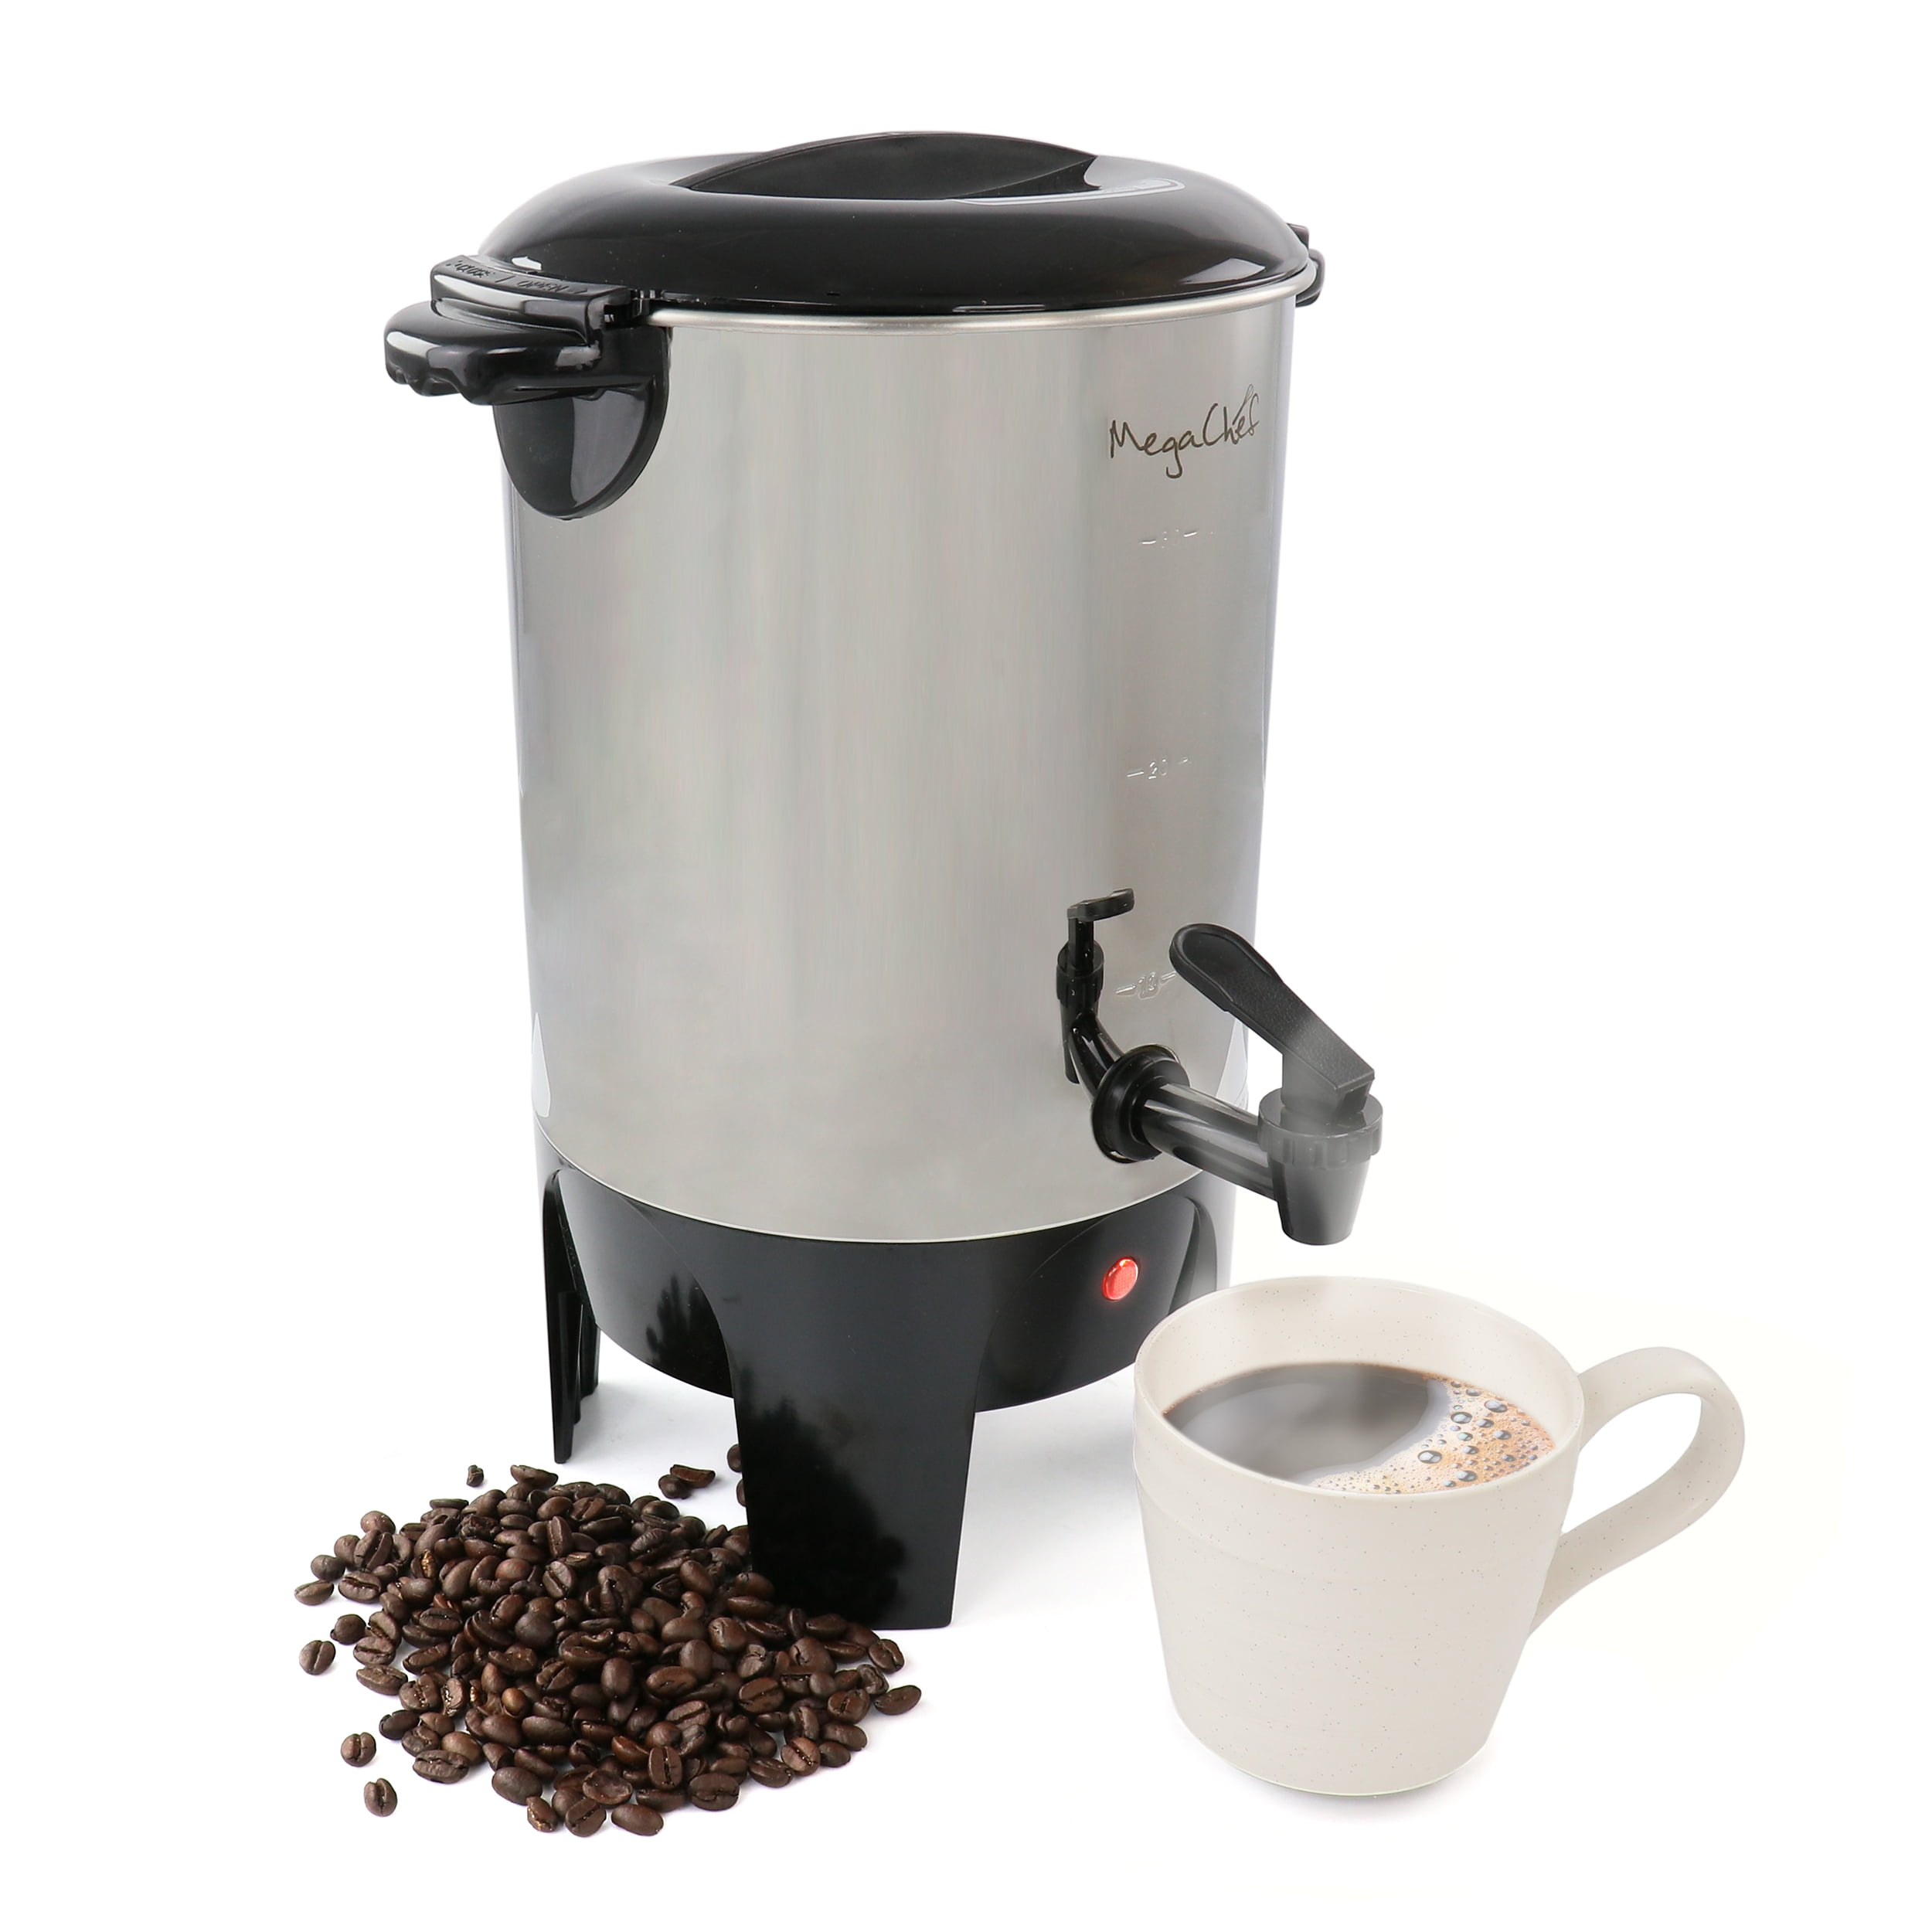 Coffee pot 30 cup - Coffee Makers - Canton, Michigan, Facebook Marketplace